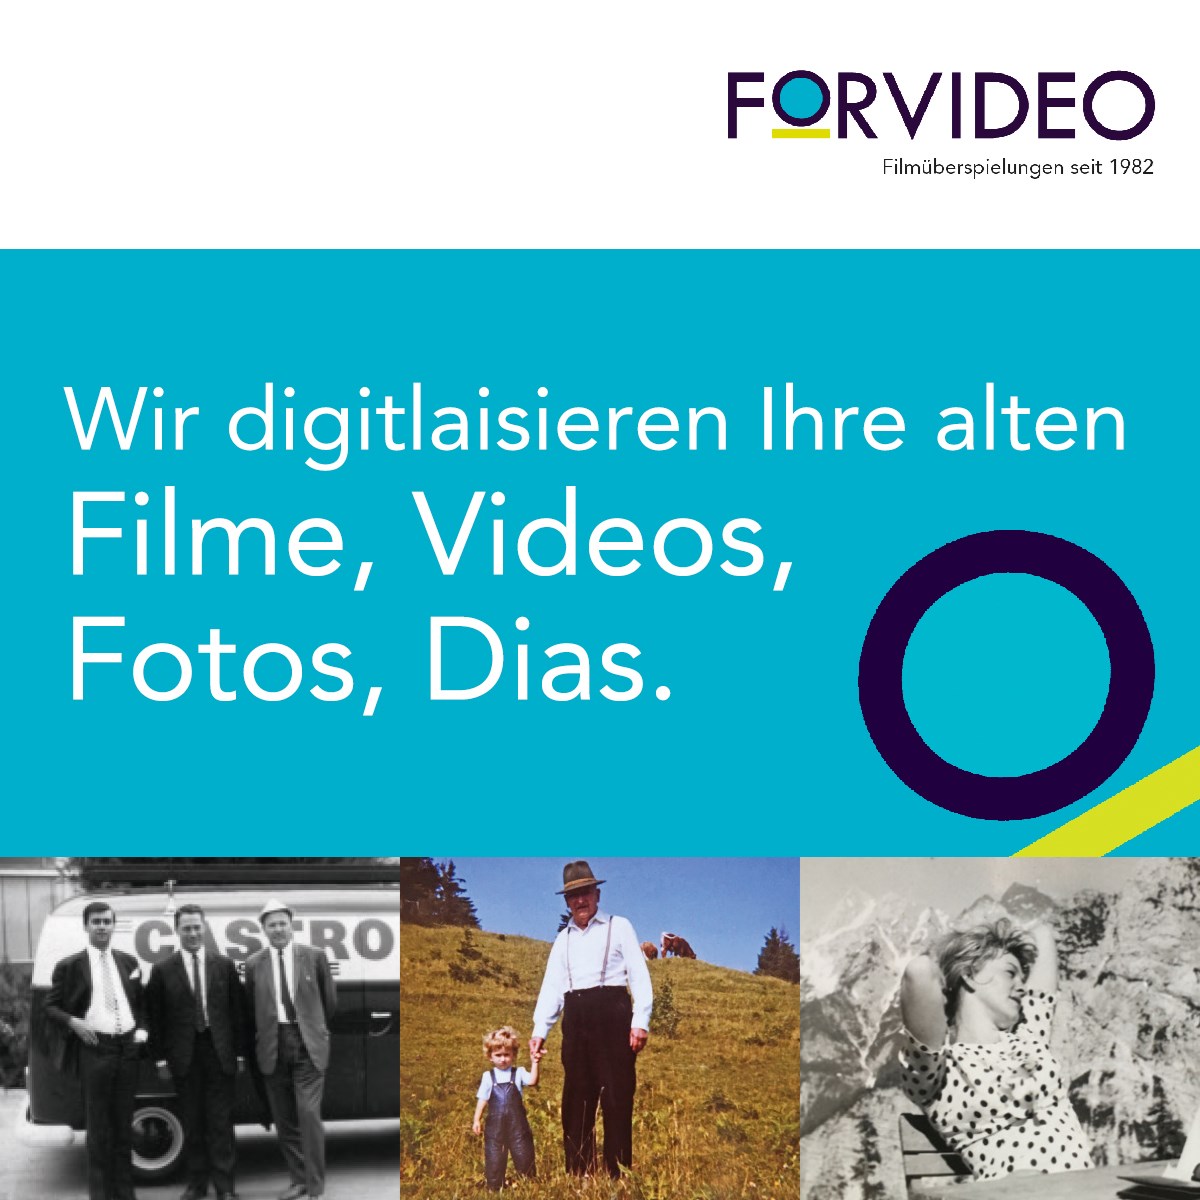 FORVIDEO - Film & Foto Digitalisierung Produkt-Beispiele Digitalisierung von Film, Video, Foto, Dia